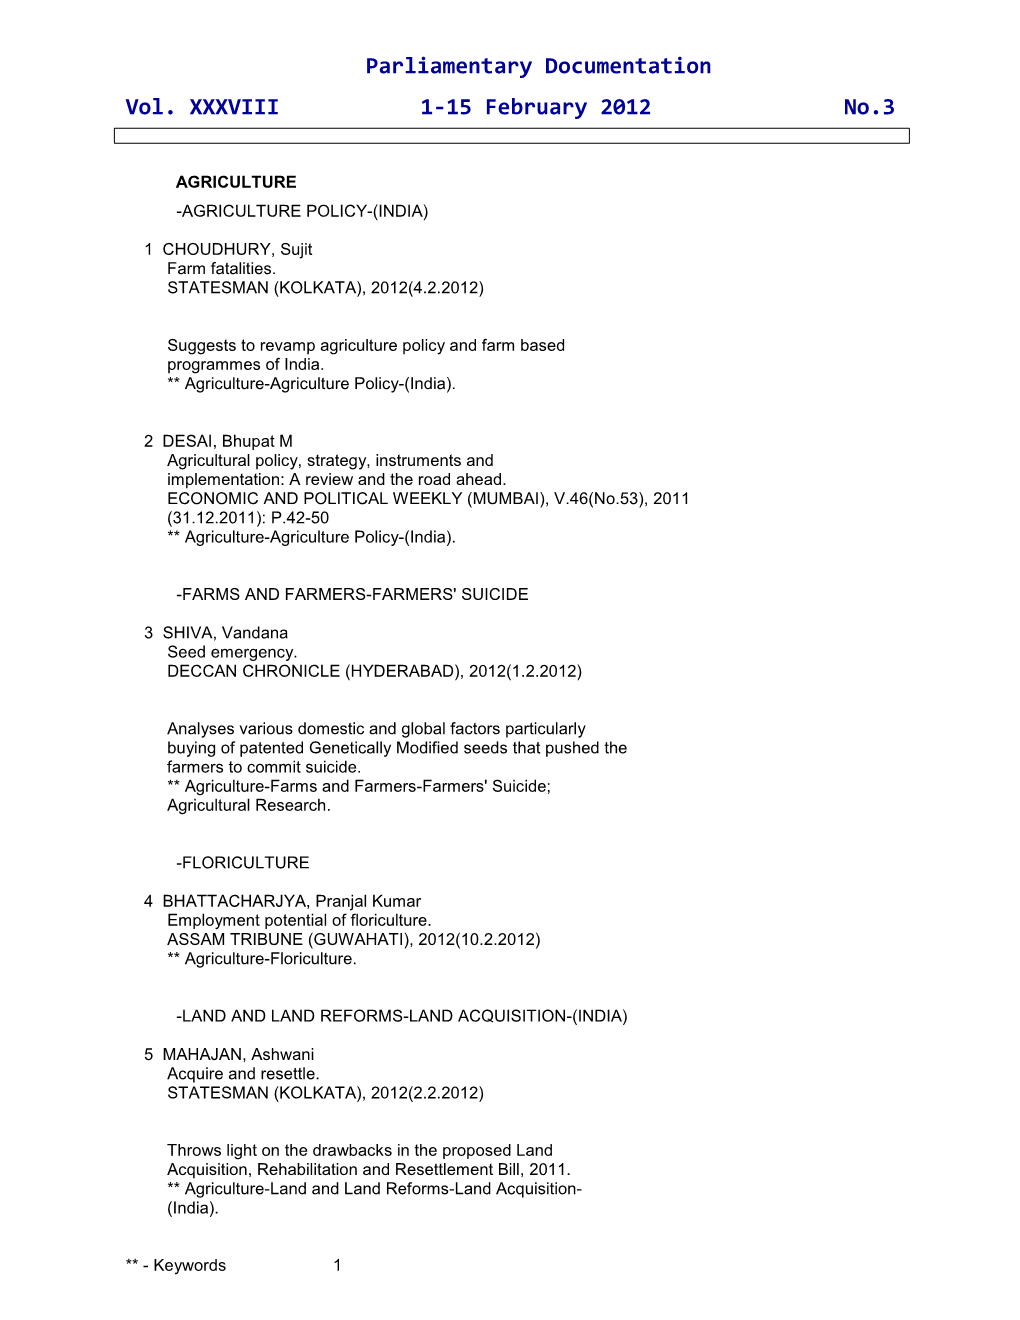 Parliamentary Documentation Vol. XXXVIII 1-15 February 2012 No.3